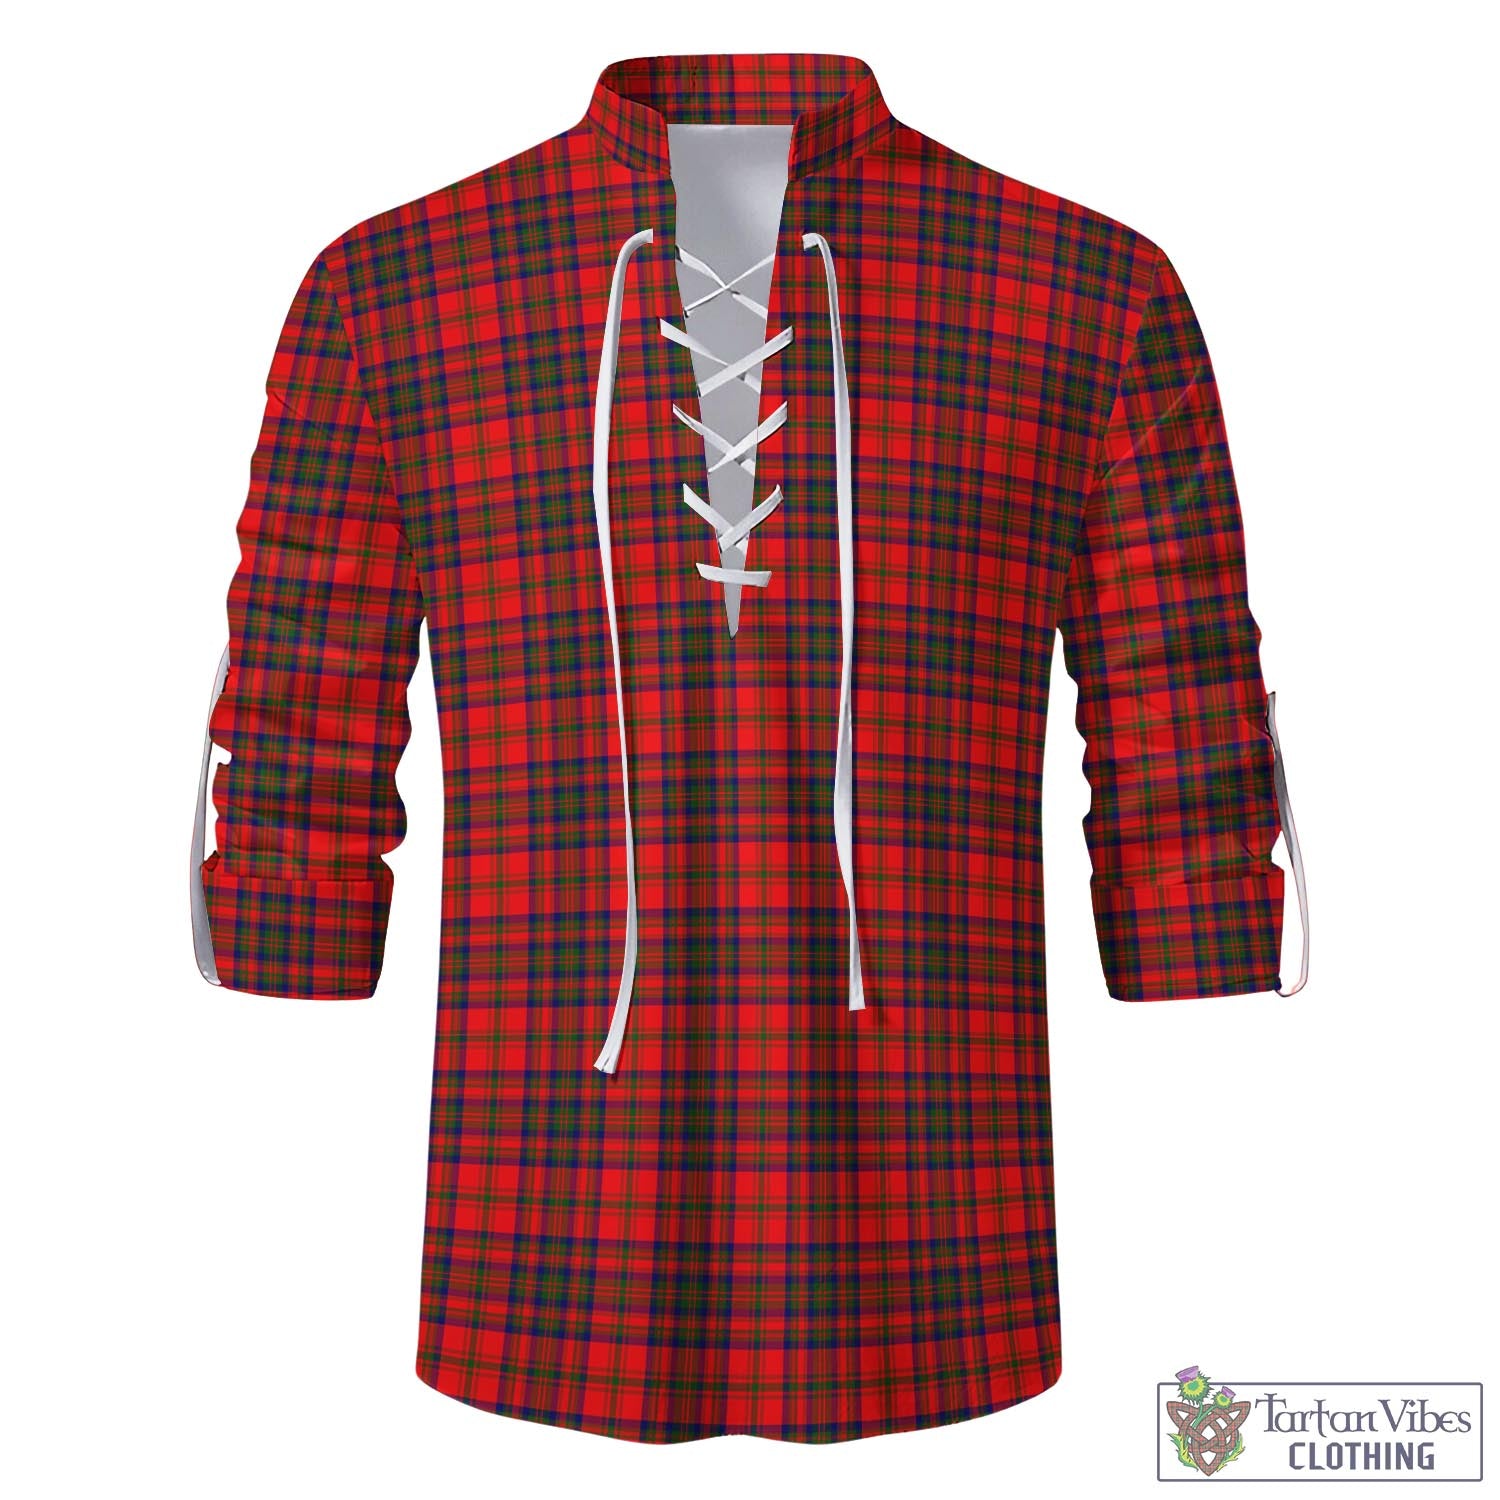 Tartan Vibes Clothing Matheson Modern Tartan Men's Scottish Traditional Jacobite Ghillie Kilt Shirt